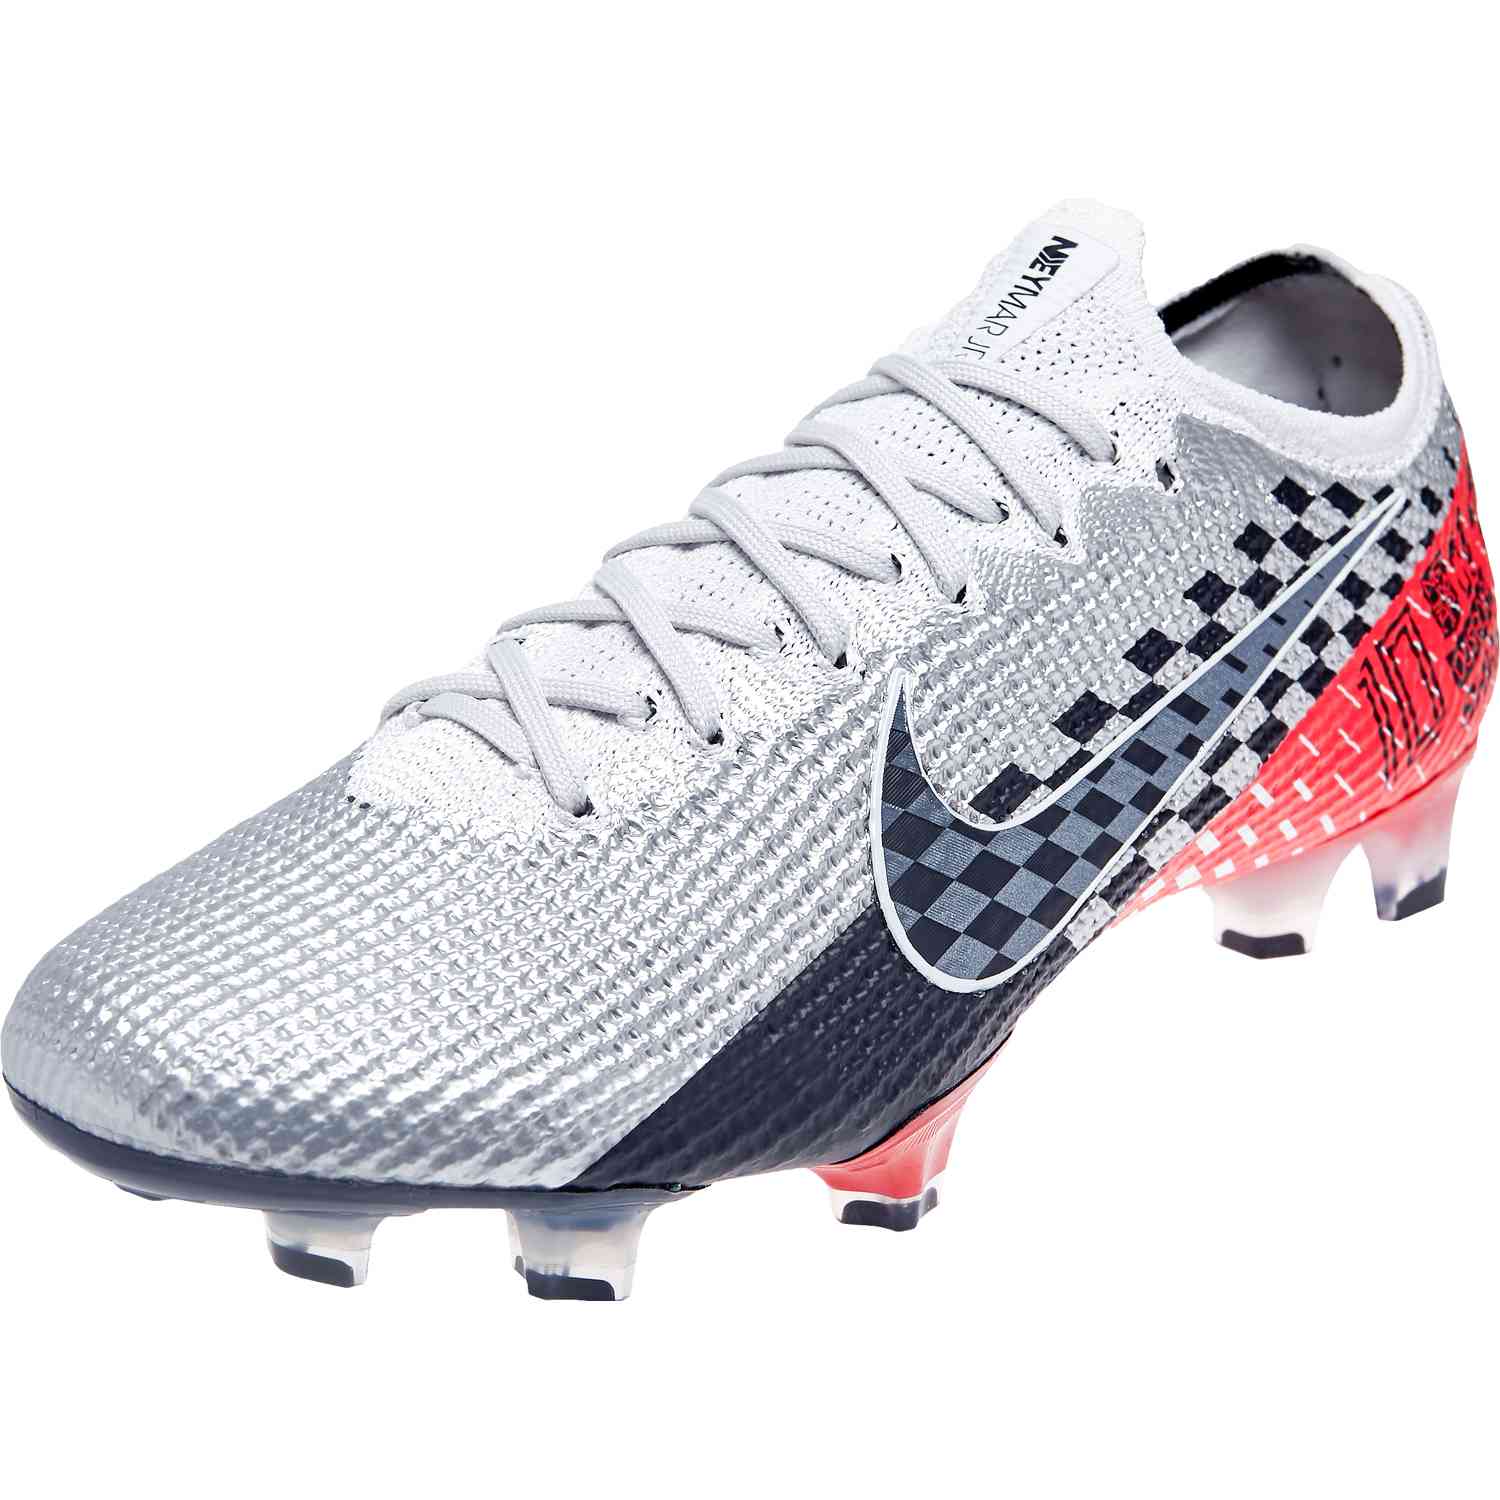 Nike Mercurial Superfly & Vapor Nike Football Boots Lovell